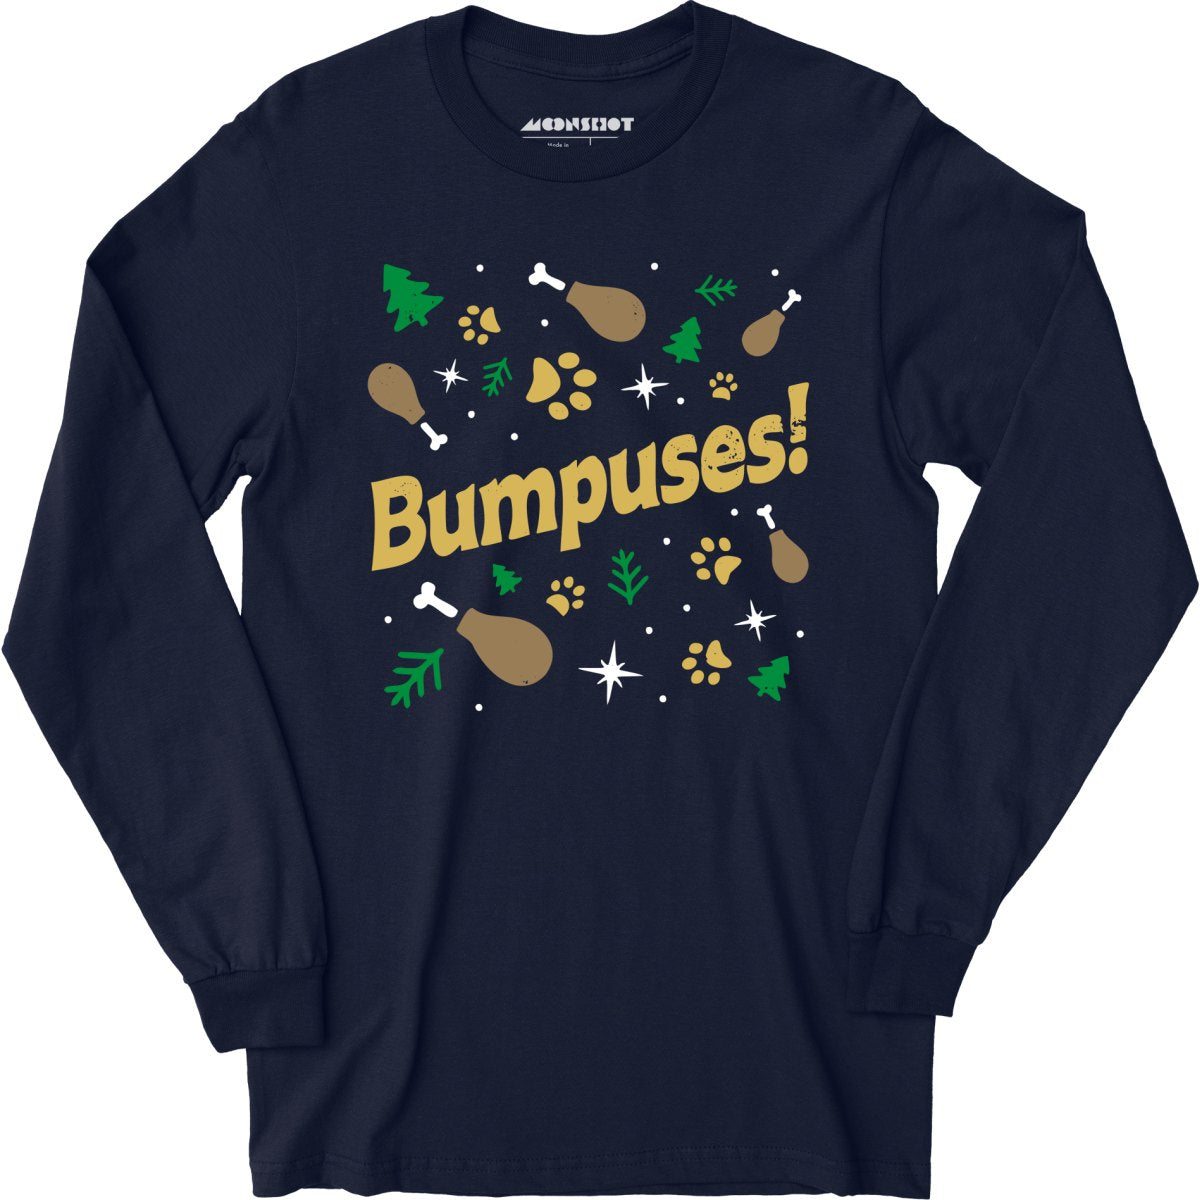 Bumpuses! - Long Sleeve T-Shirt